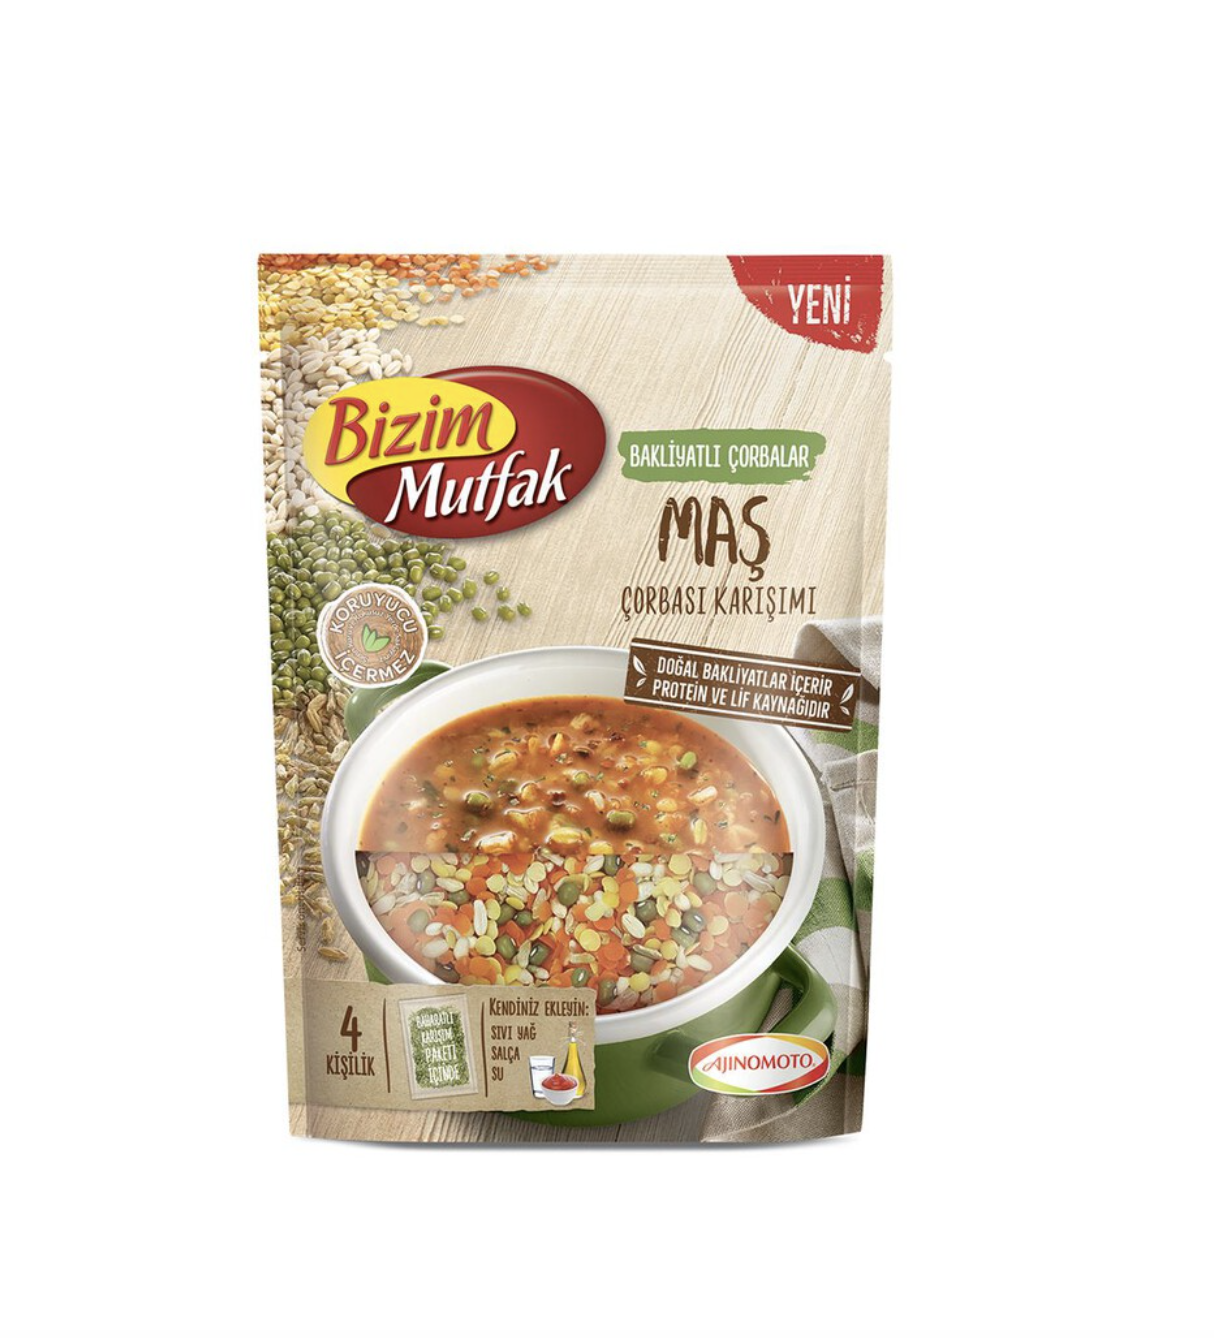 Bizim Mutfak Mong Soup Mixture With Legumes 132,5 g / 4.67 oz 2packs